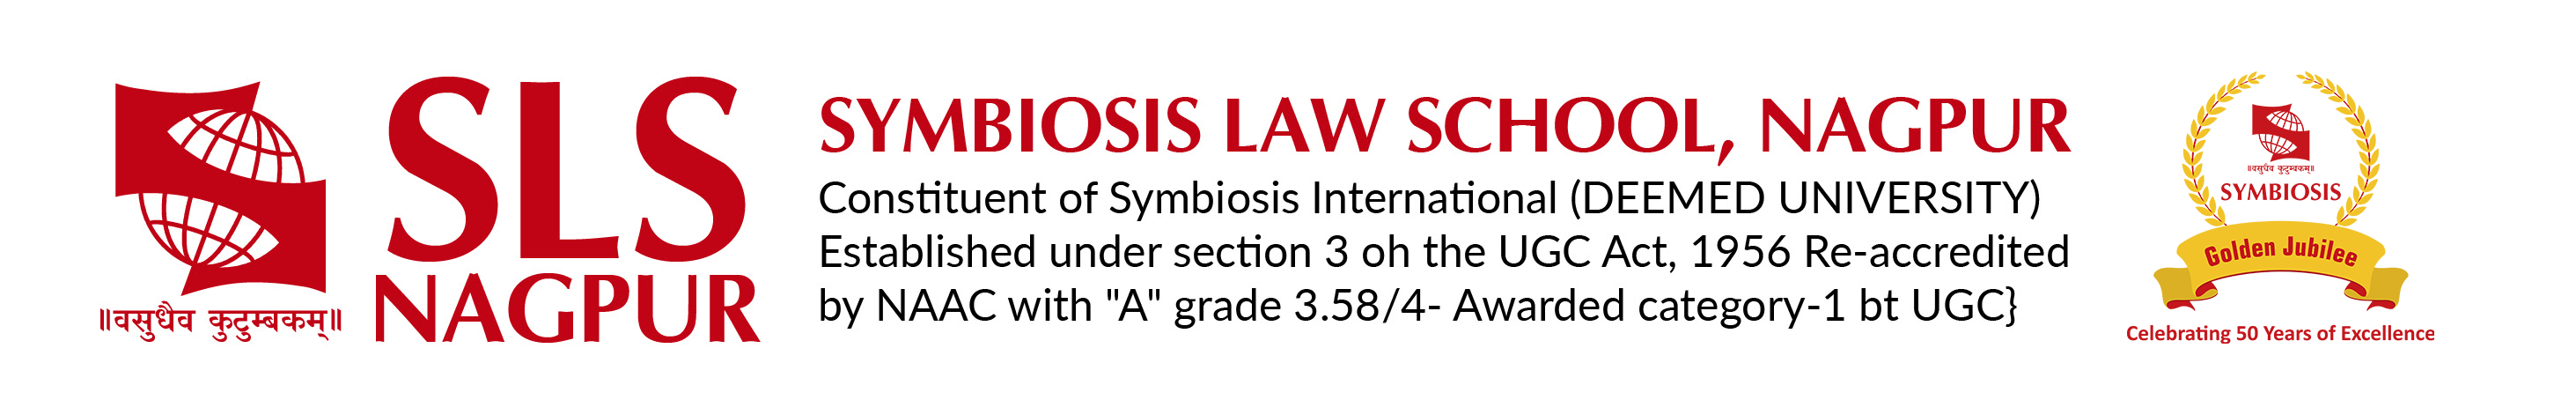 Symbiosis law school Nagpur logo